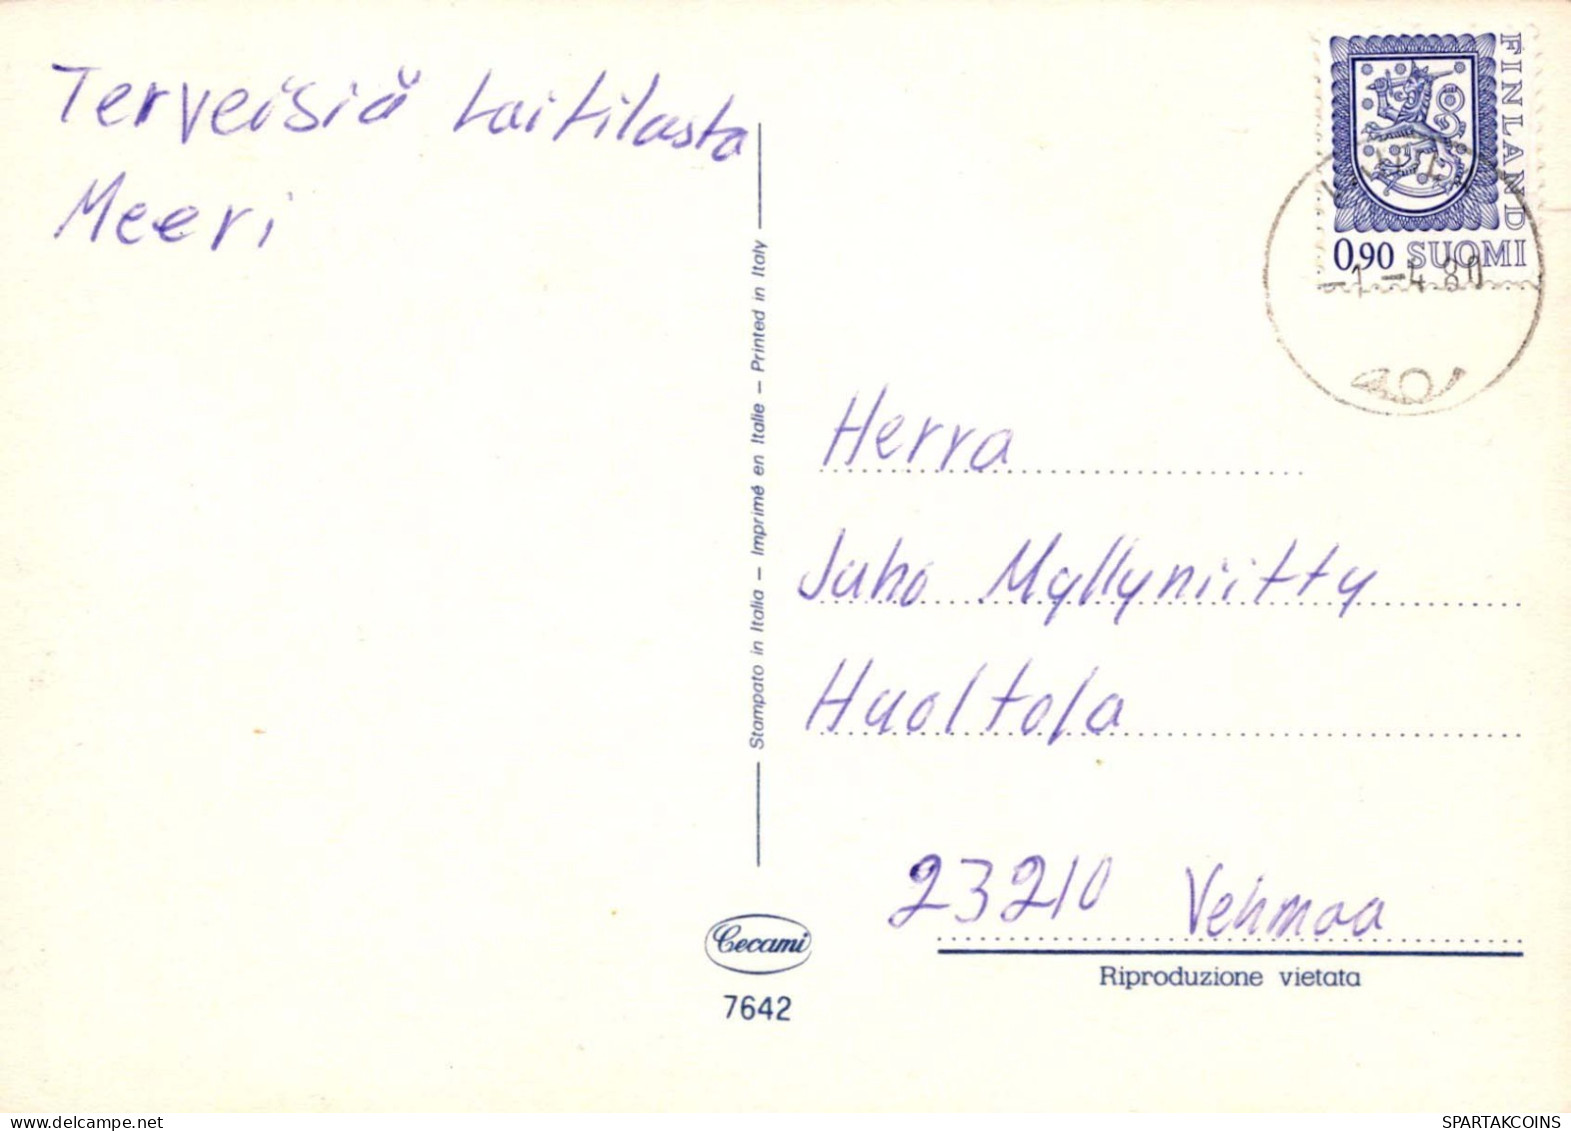 PASCUA POLLO HUEVO Vintage Tarjeta Postal CPSM #PBP113.ES - Easter